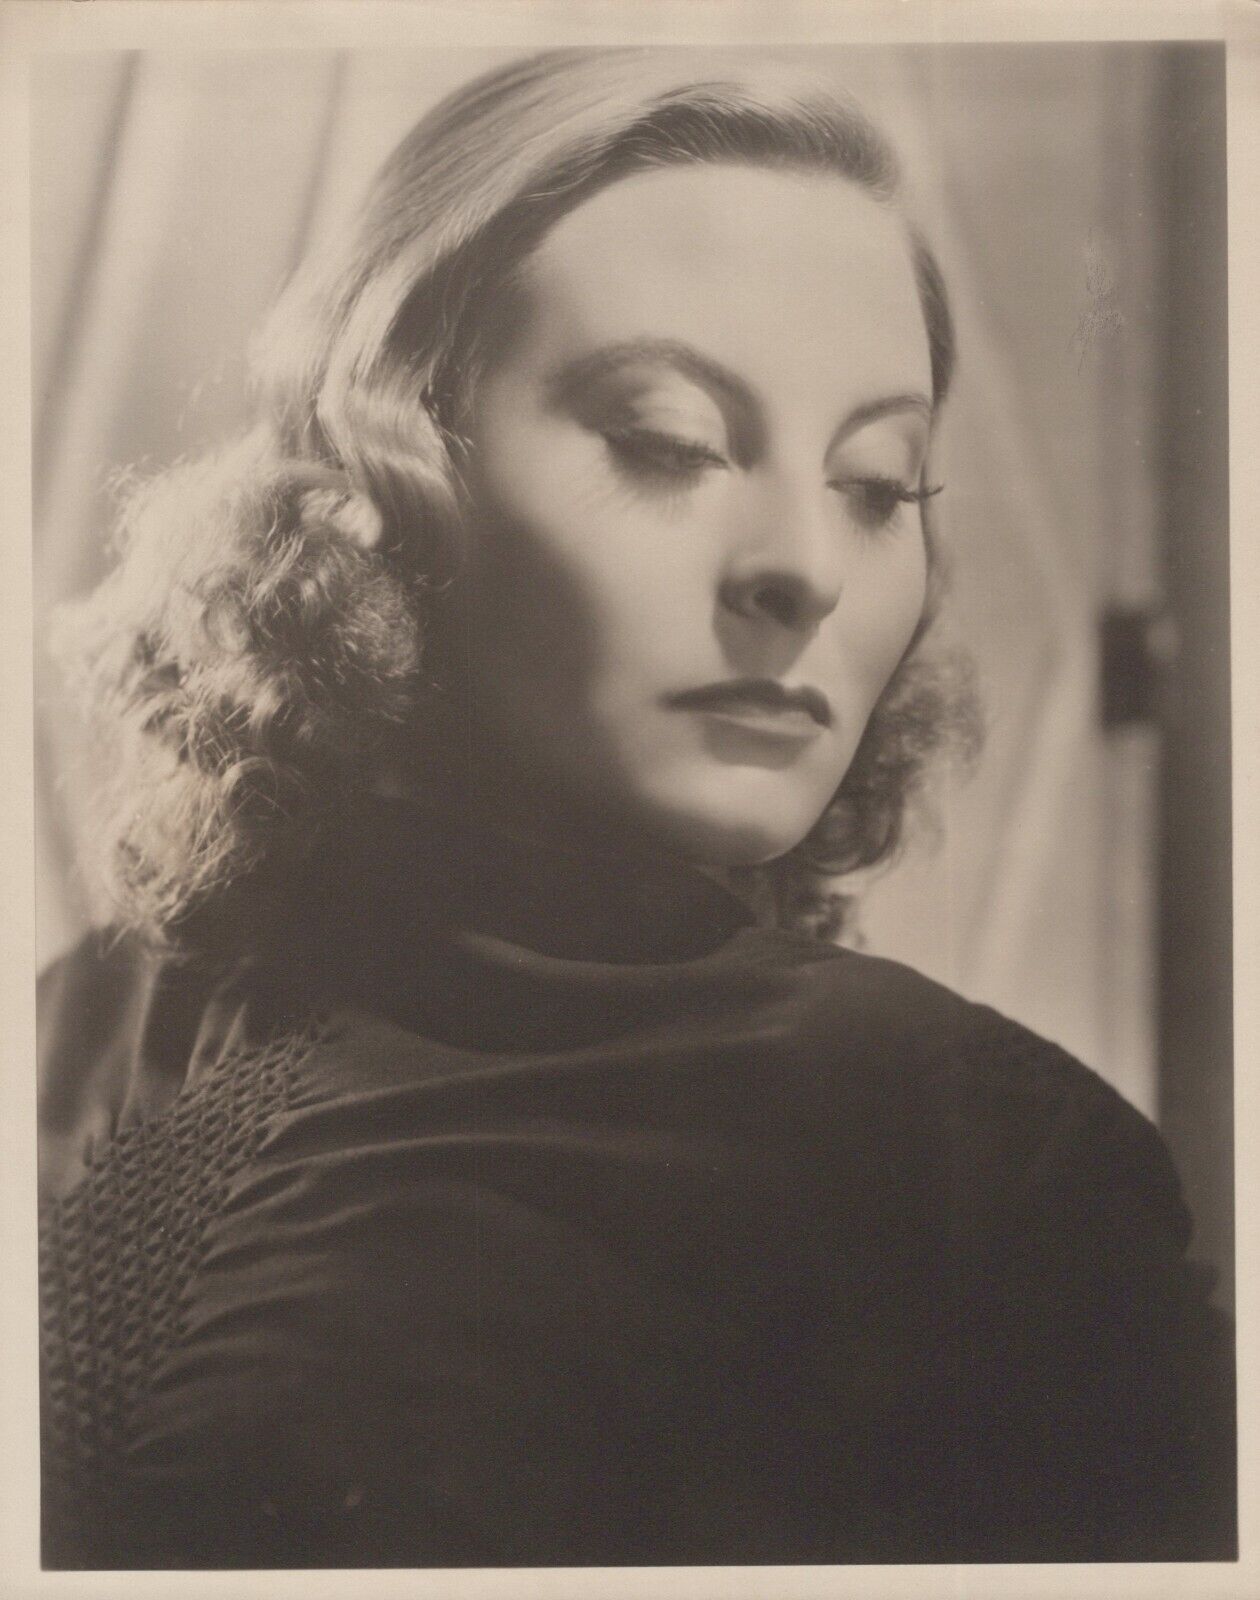 Michèle Morgan (1950s) ❤🎥 Stunning Portrait - Original Vintage Photo K 245